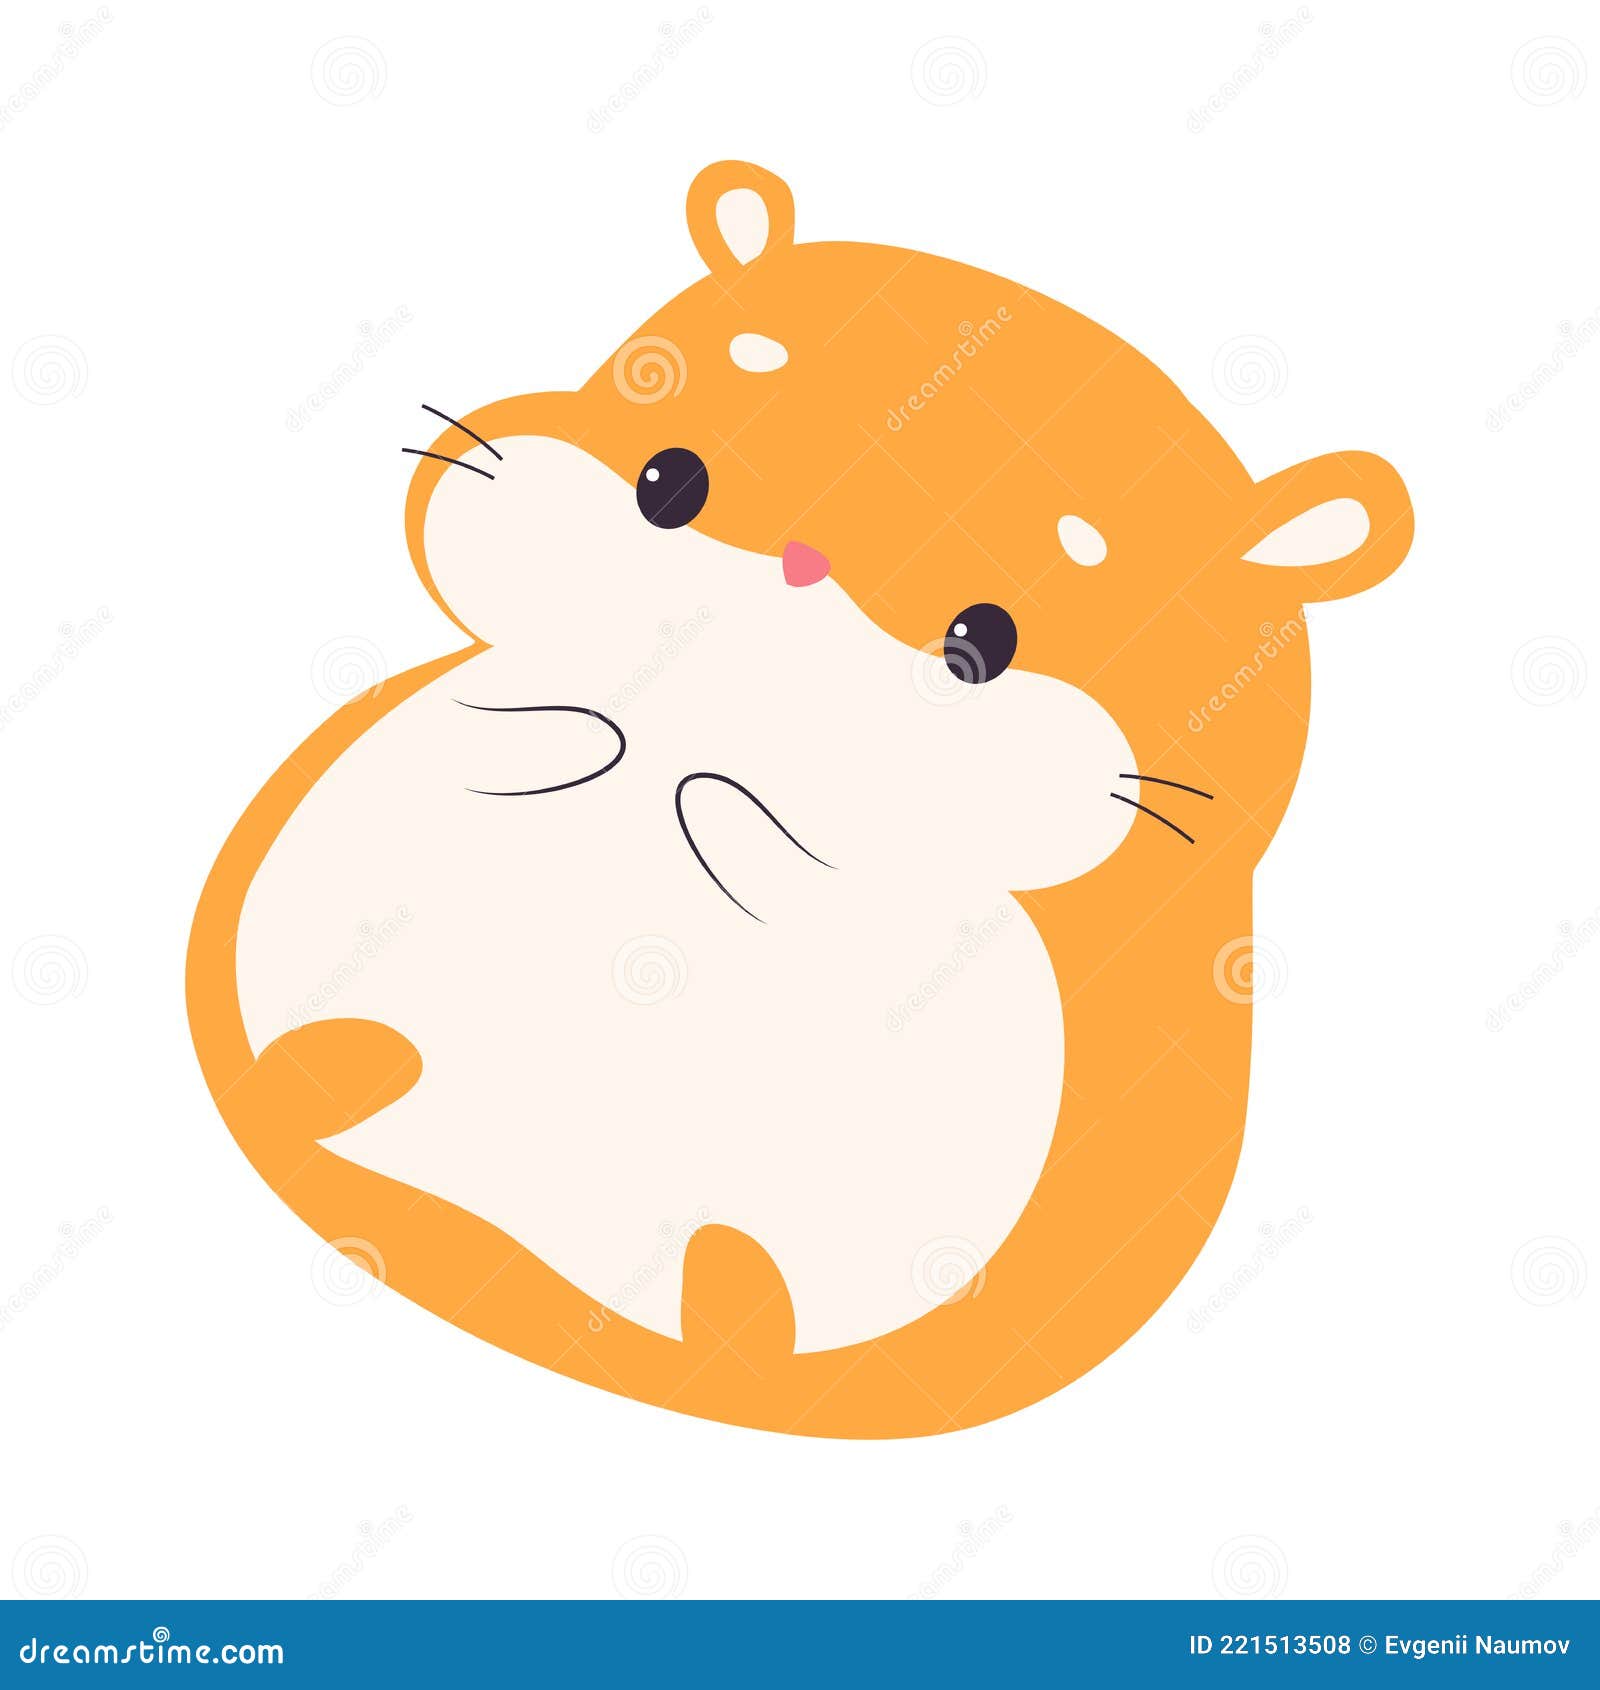 Cute Adorable Hamster Pet Animal Cartoon Vector Illustration Stock ...